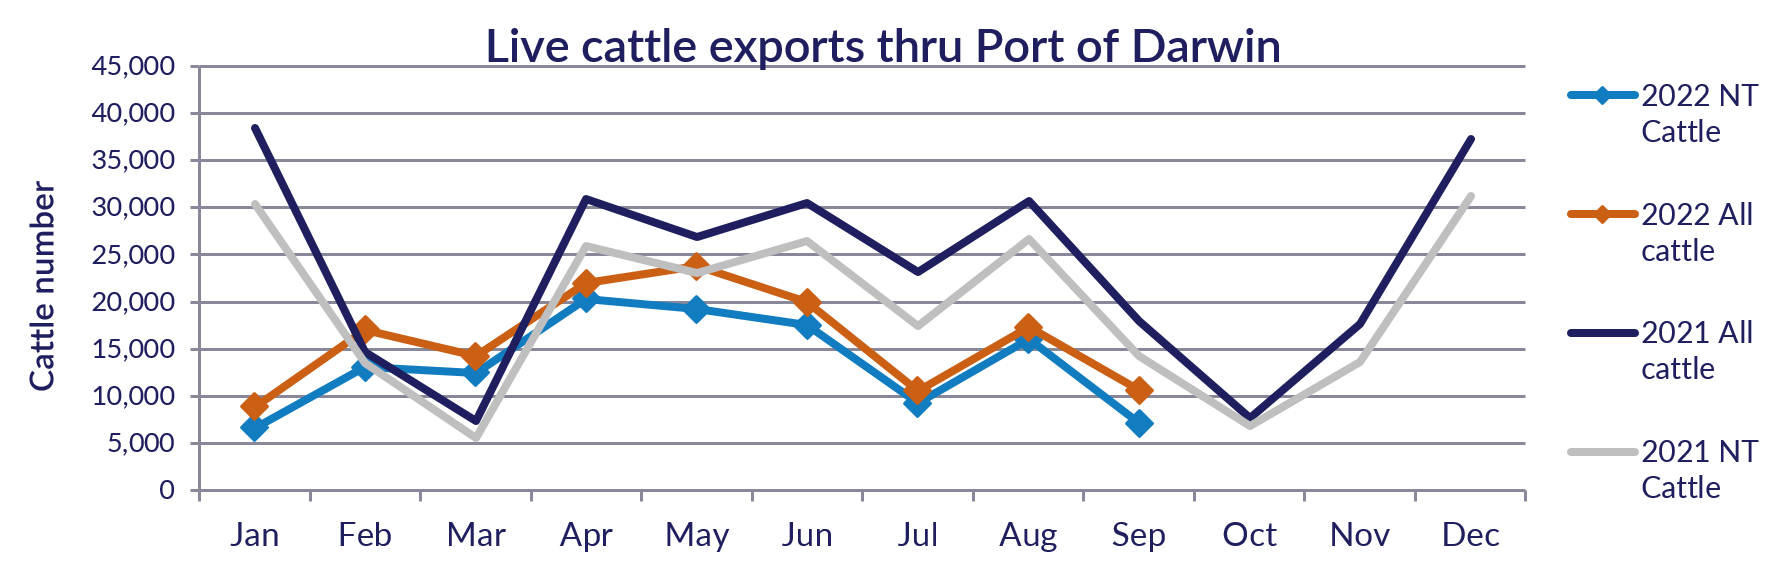 Live cattle exports thru Port of Darwin